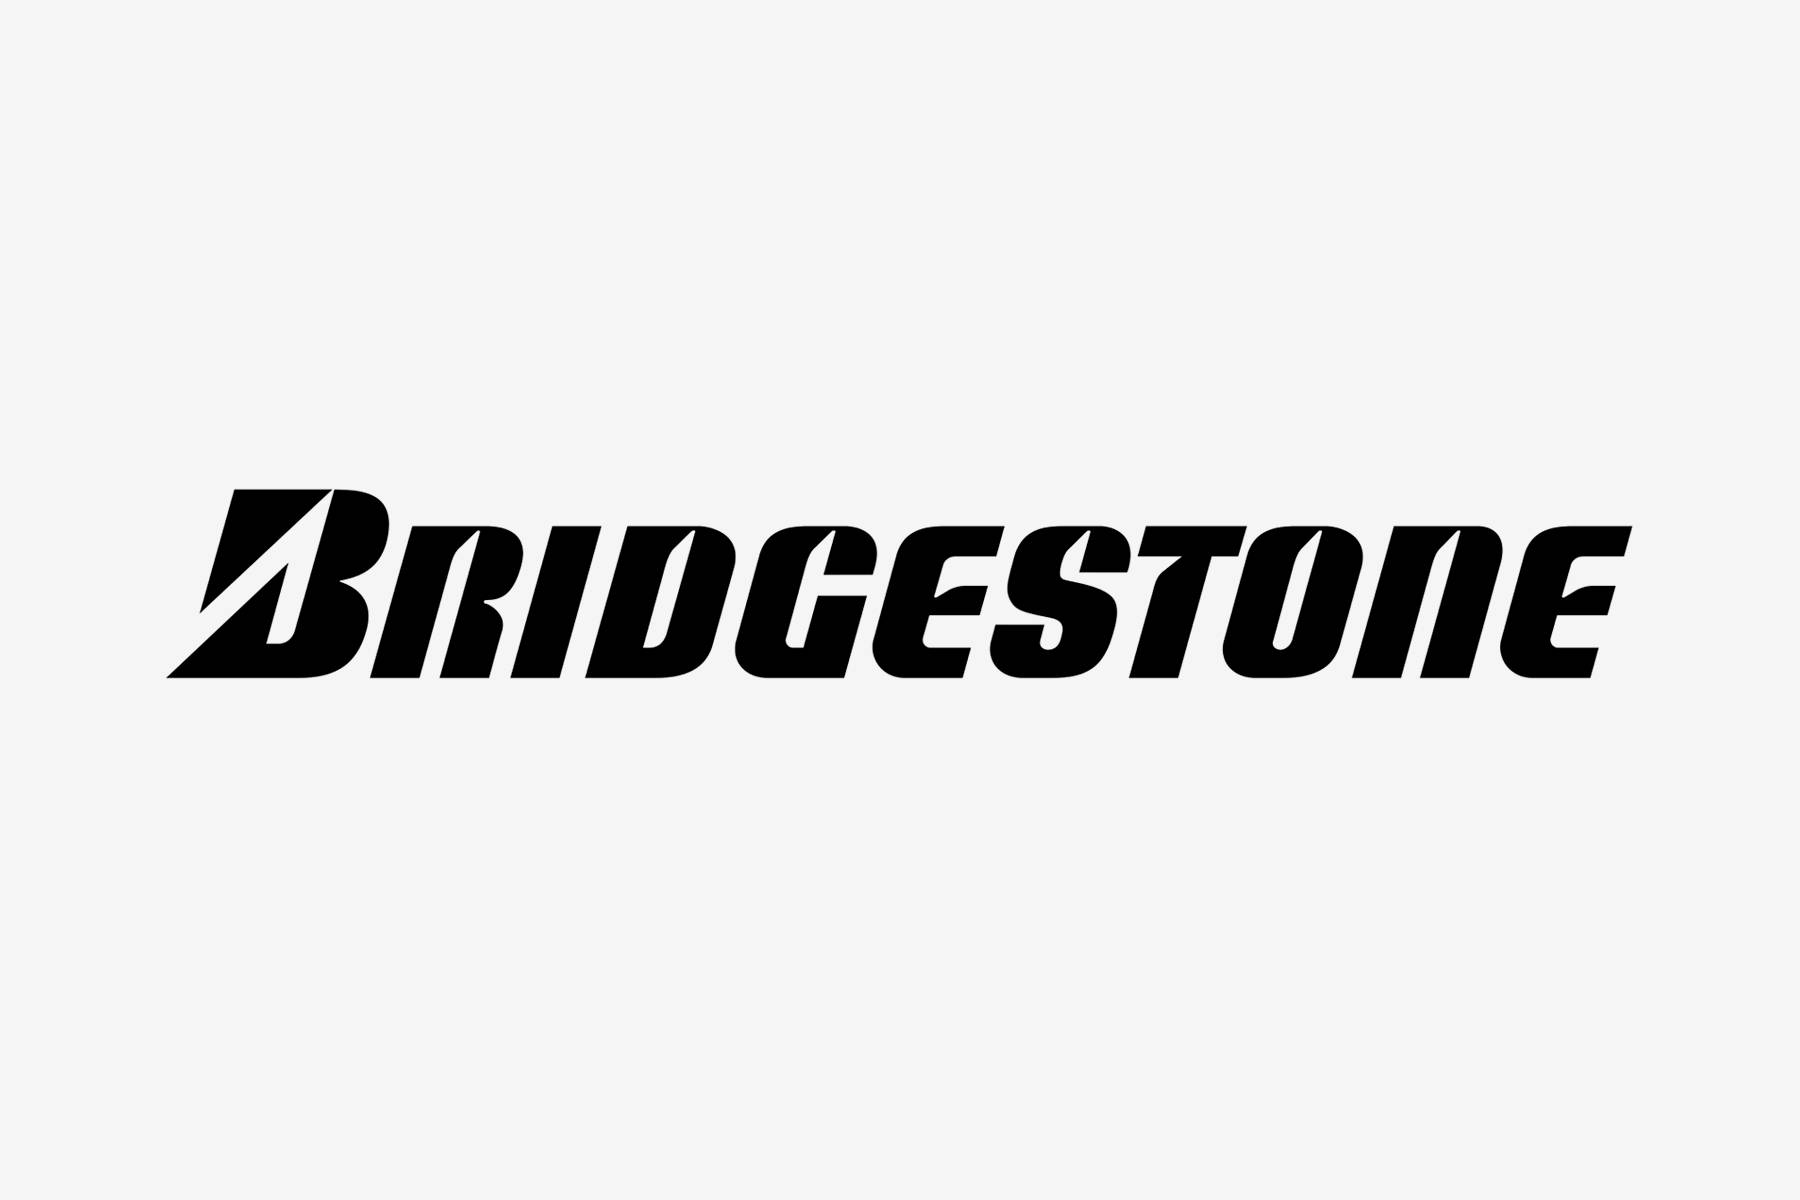 Bridgestone Current Logo Wallpaper